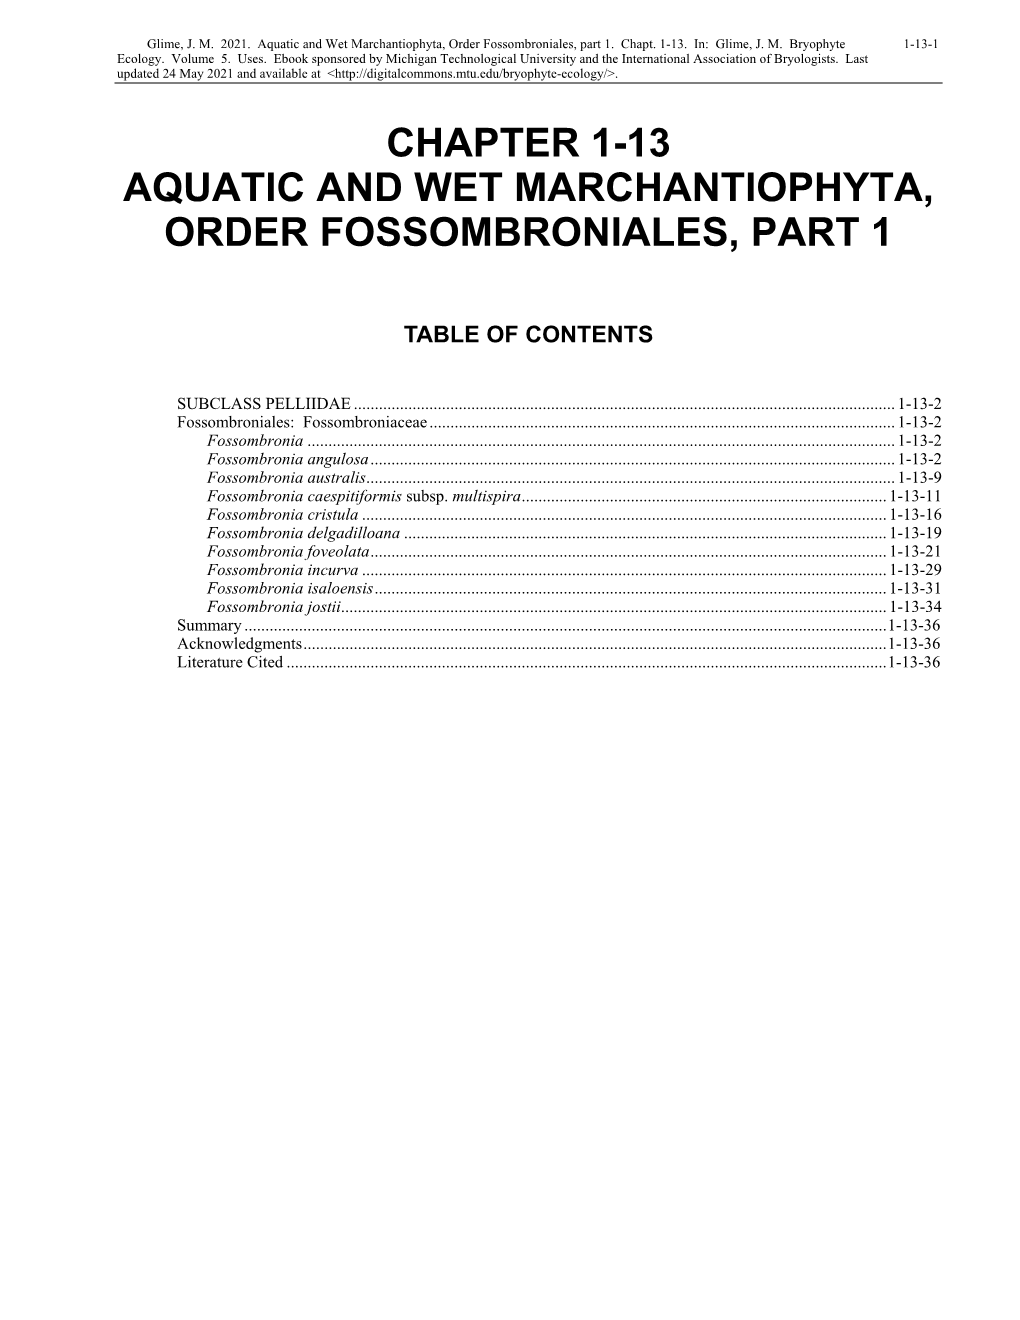 Aquatic and Wet Marchantiophyta, Order Fossombroniales, Part 1